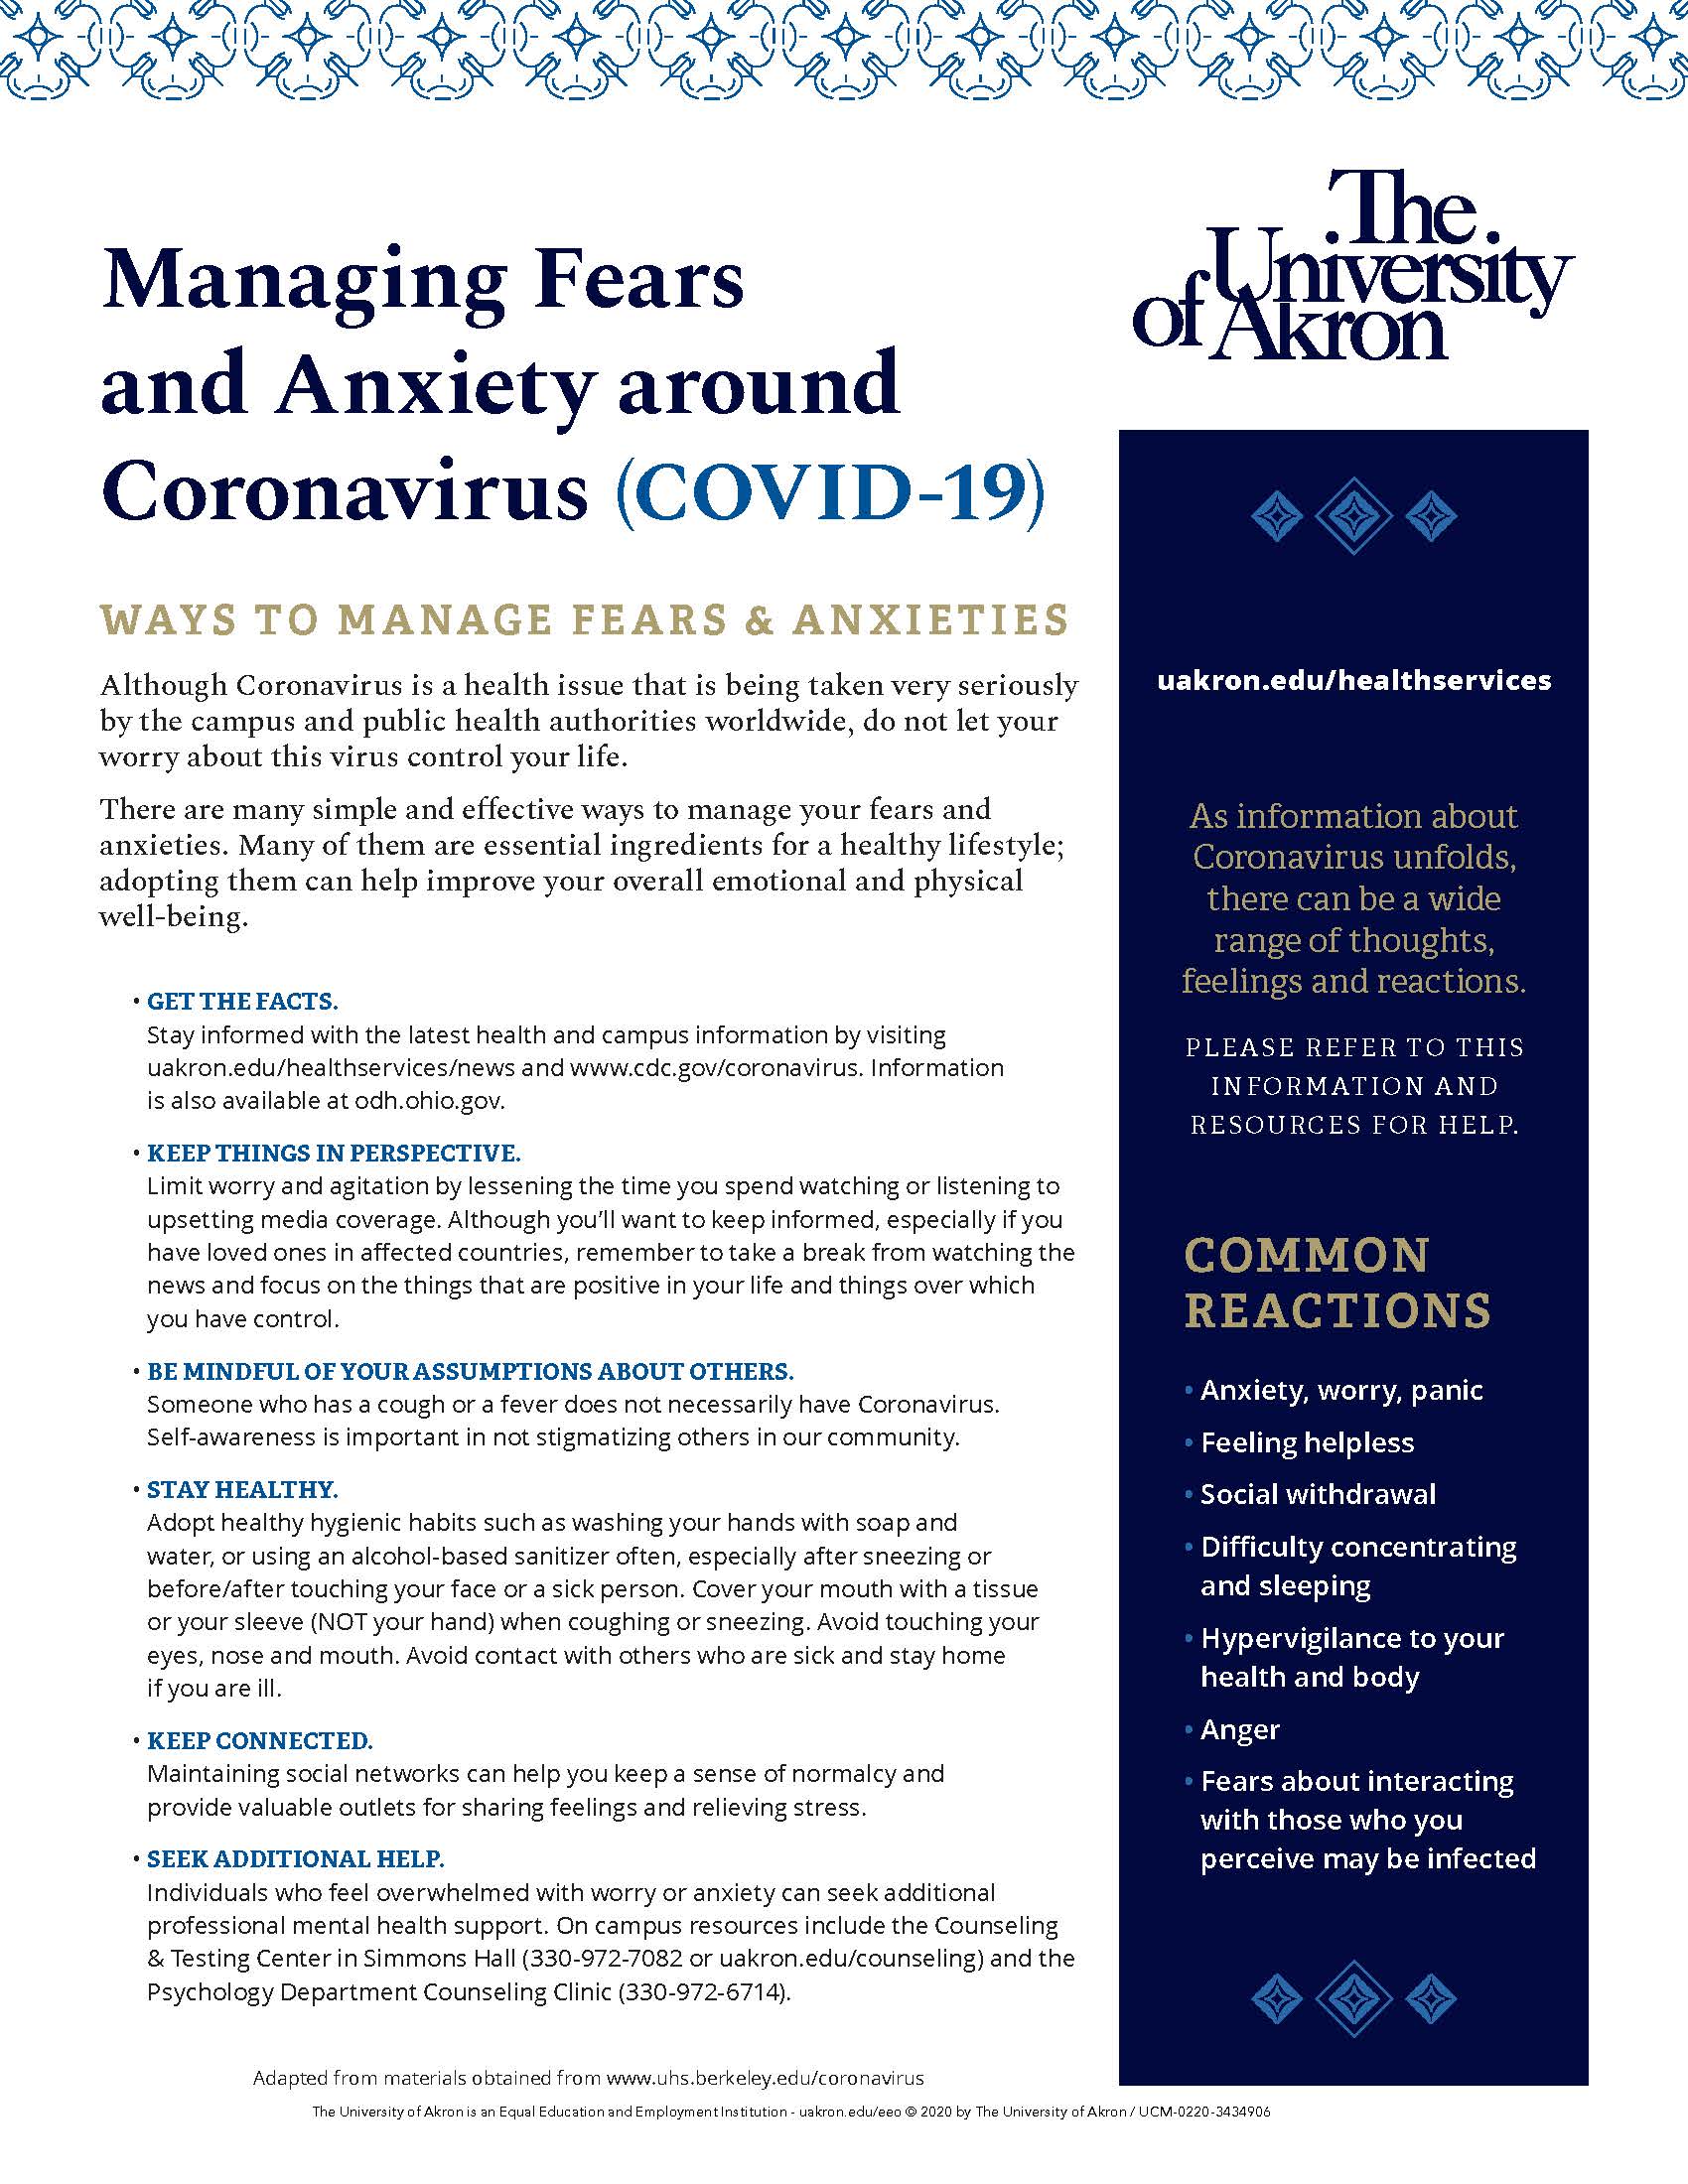 Managing fears and anxiety around coronavirus and COVID-19